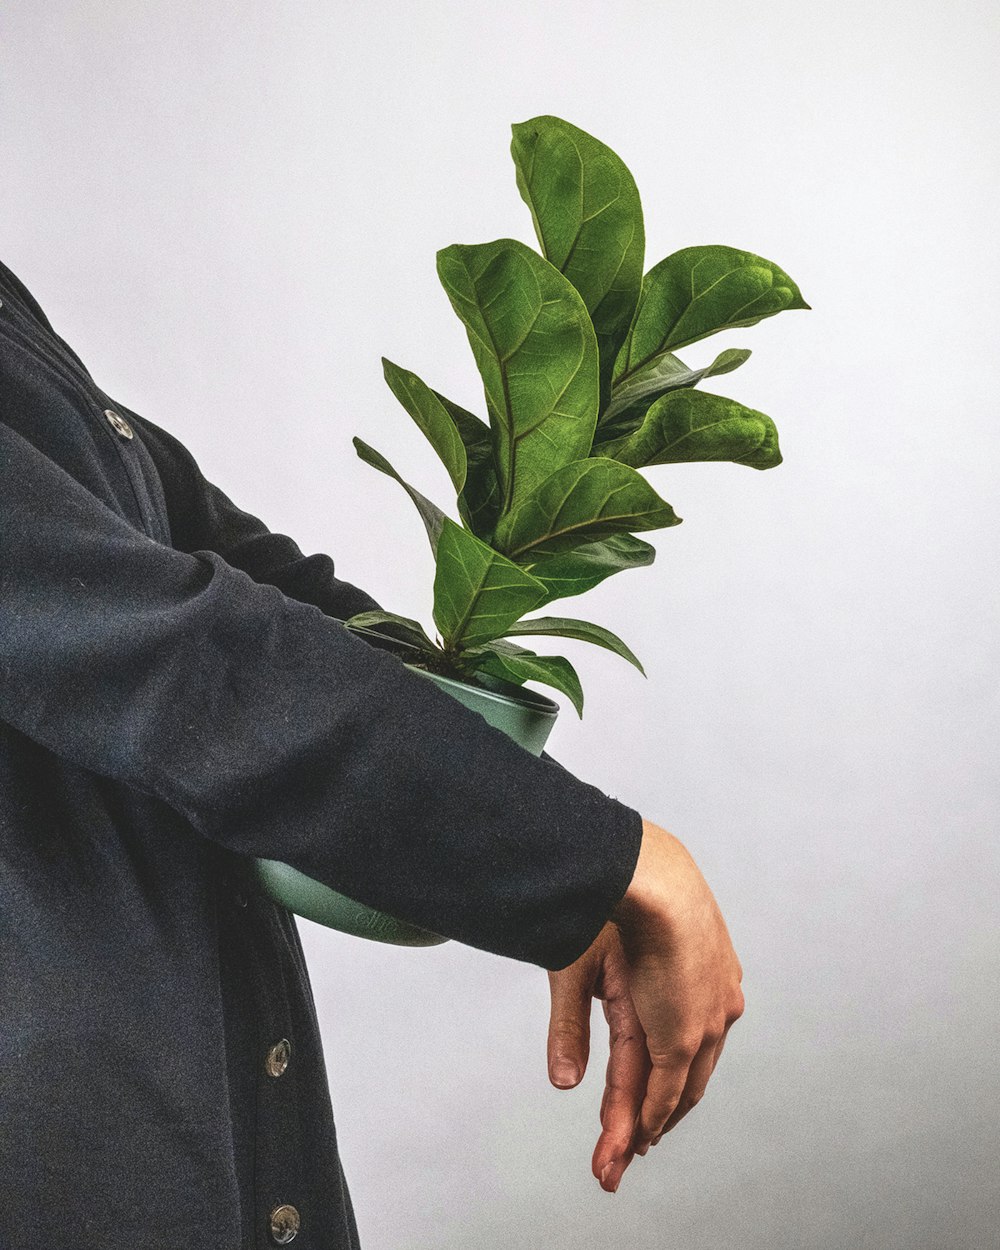 Persona con abrigo negro sosteniendo una planta verde